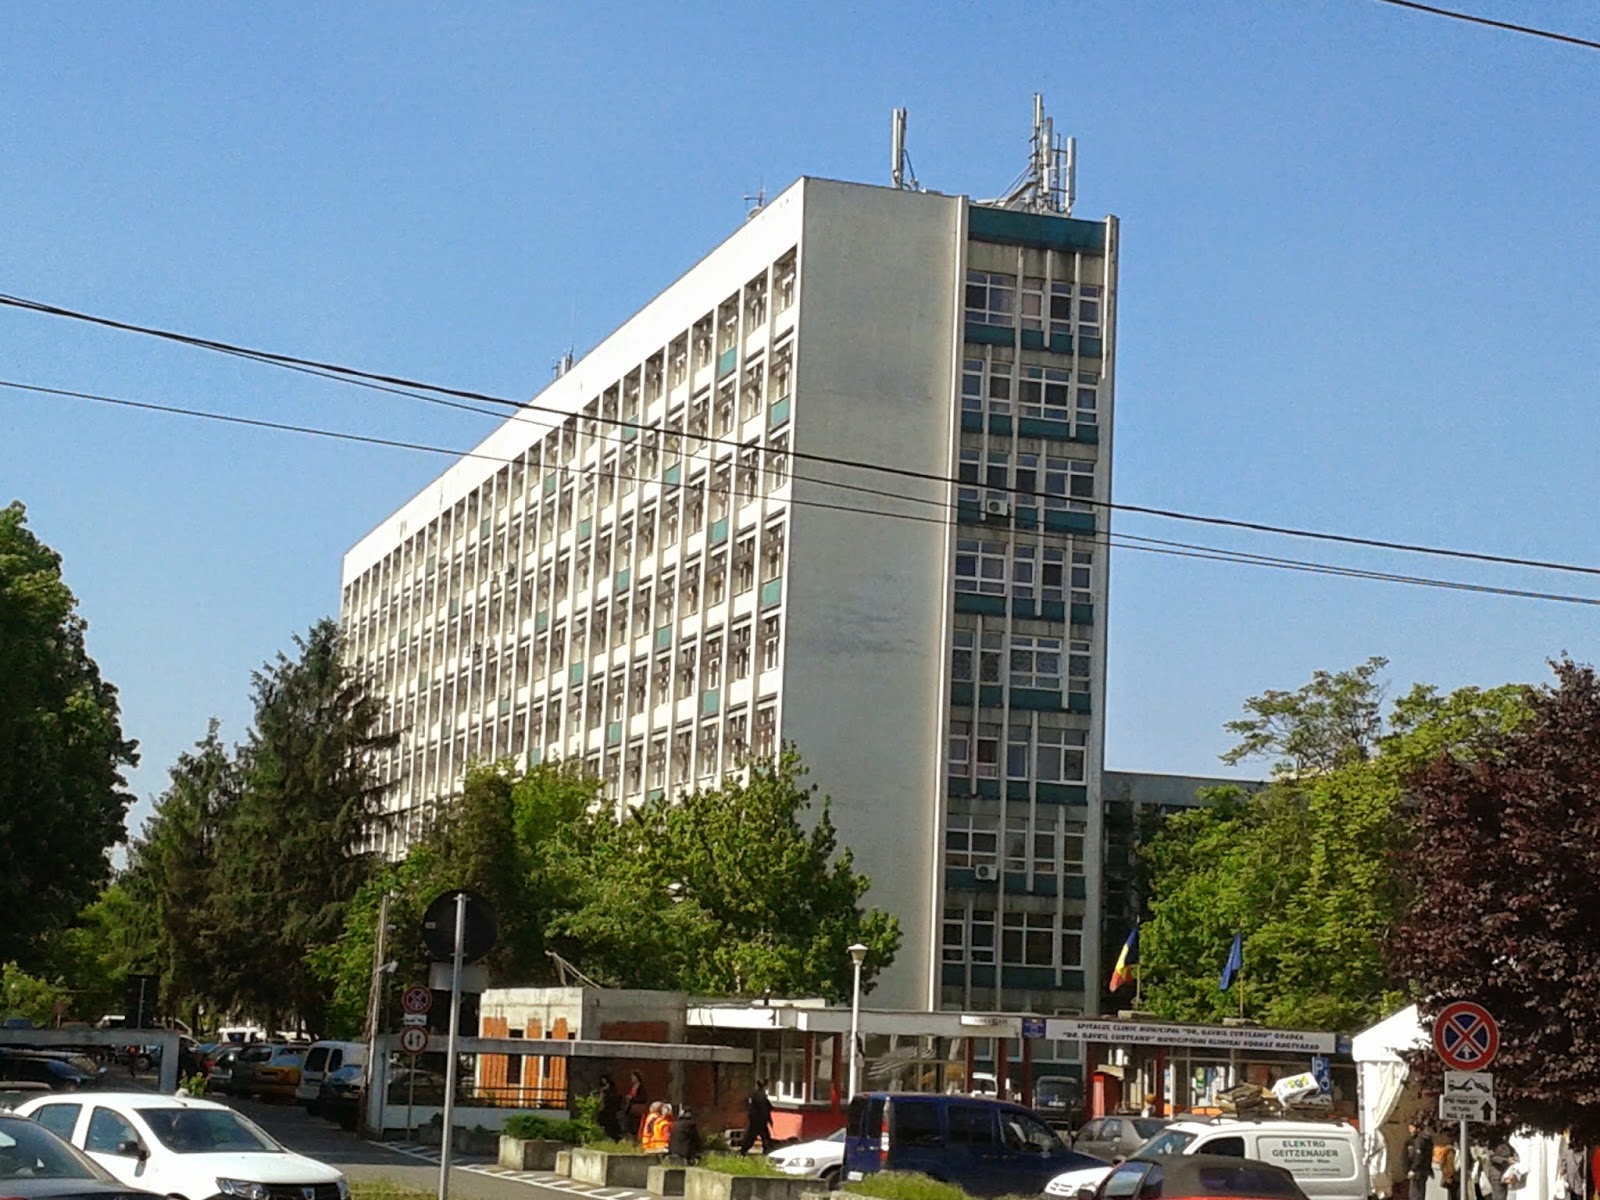 The Baby Hospital in Oradea